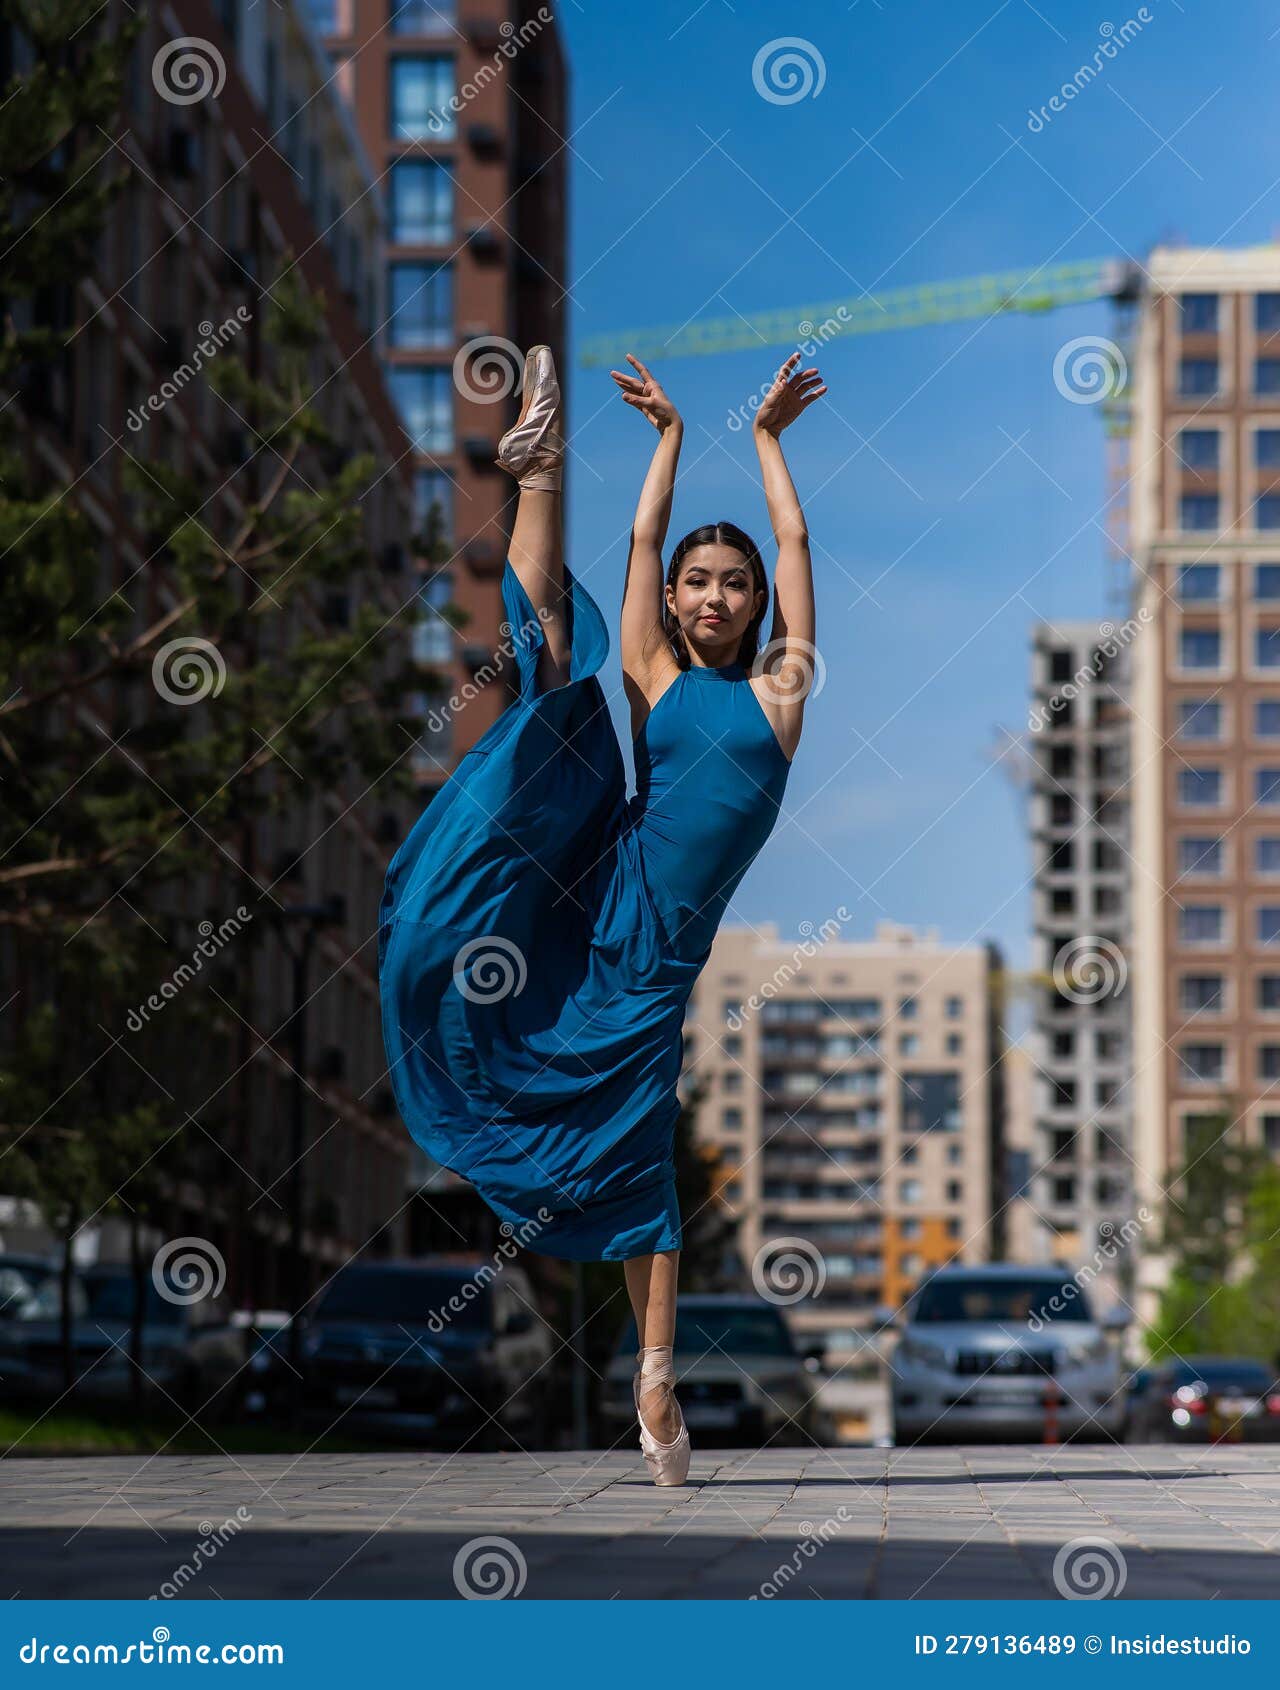 Beautiful Asian Ballerina Dancing Outdoors. Urban Landscape. Stock ...